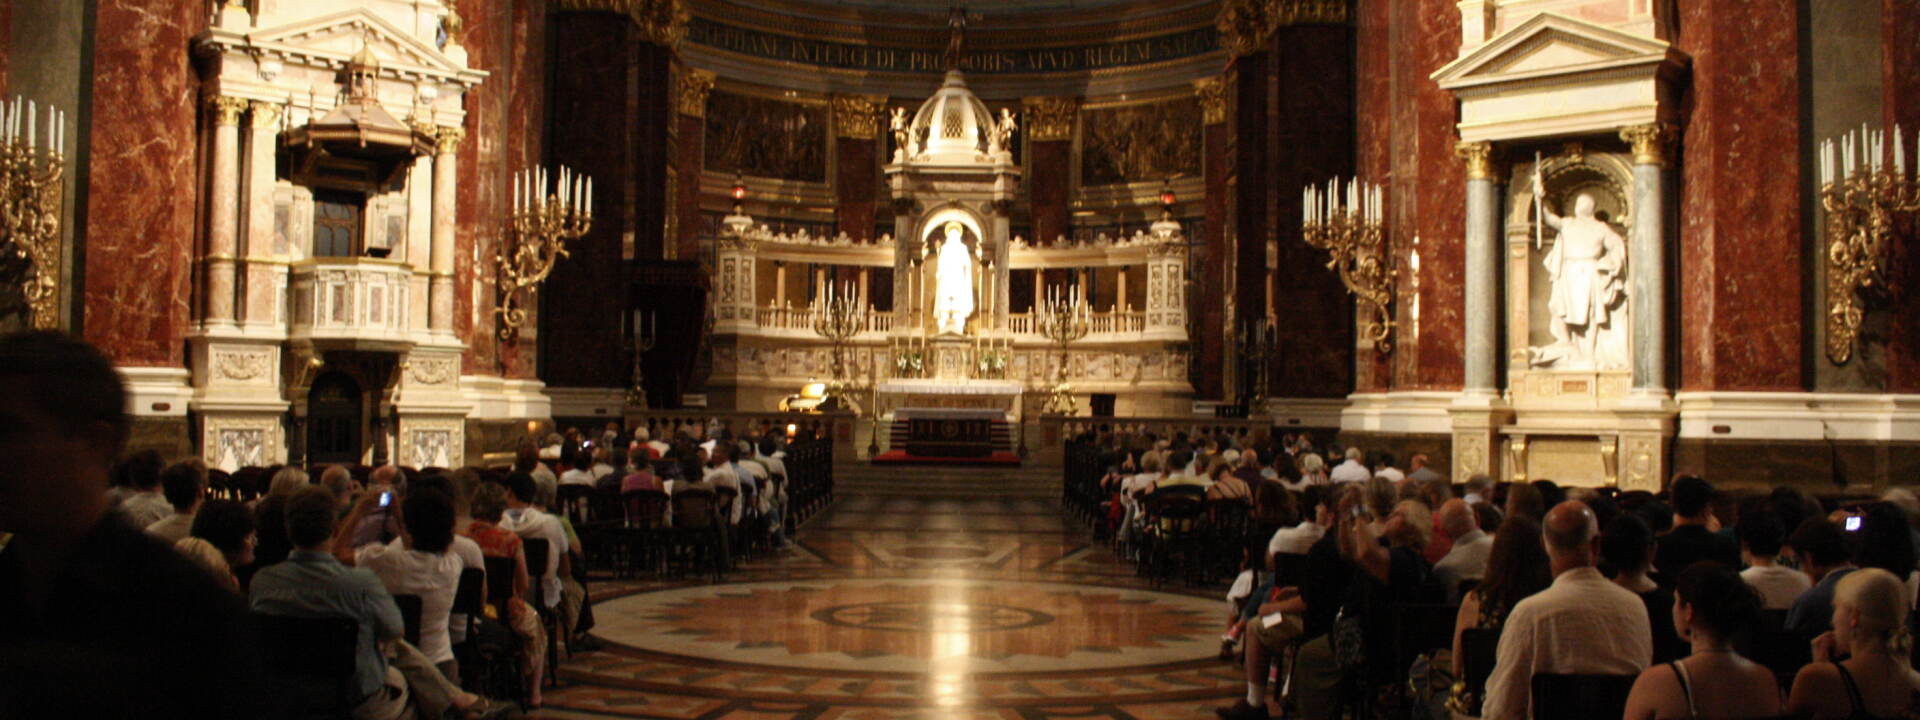 Orgelkonzert in der Basilika St. Stefan © Hungaria Koncert ltd.